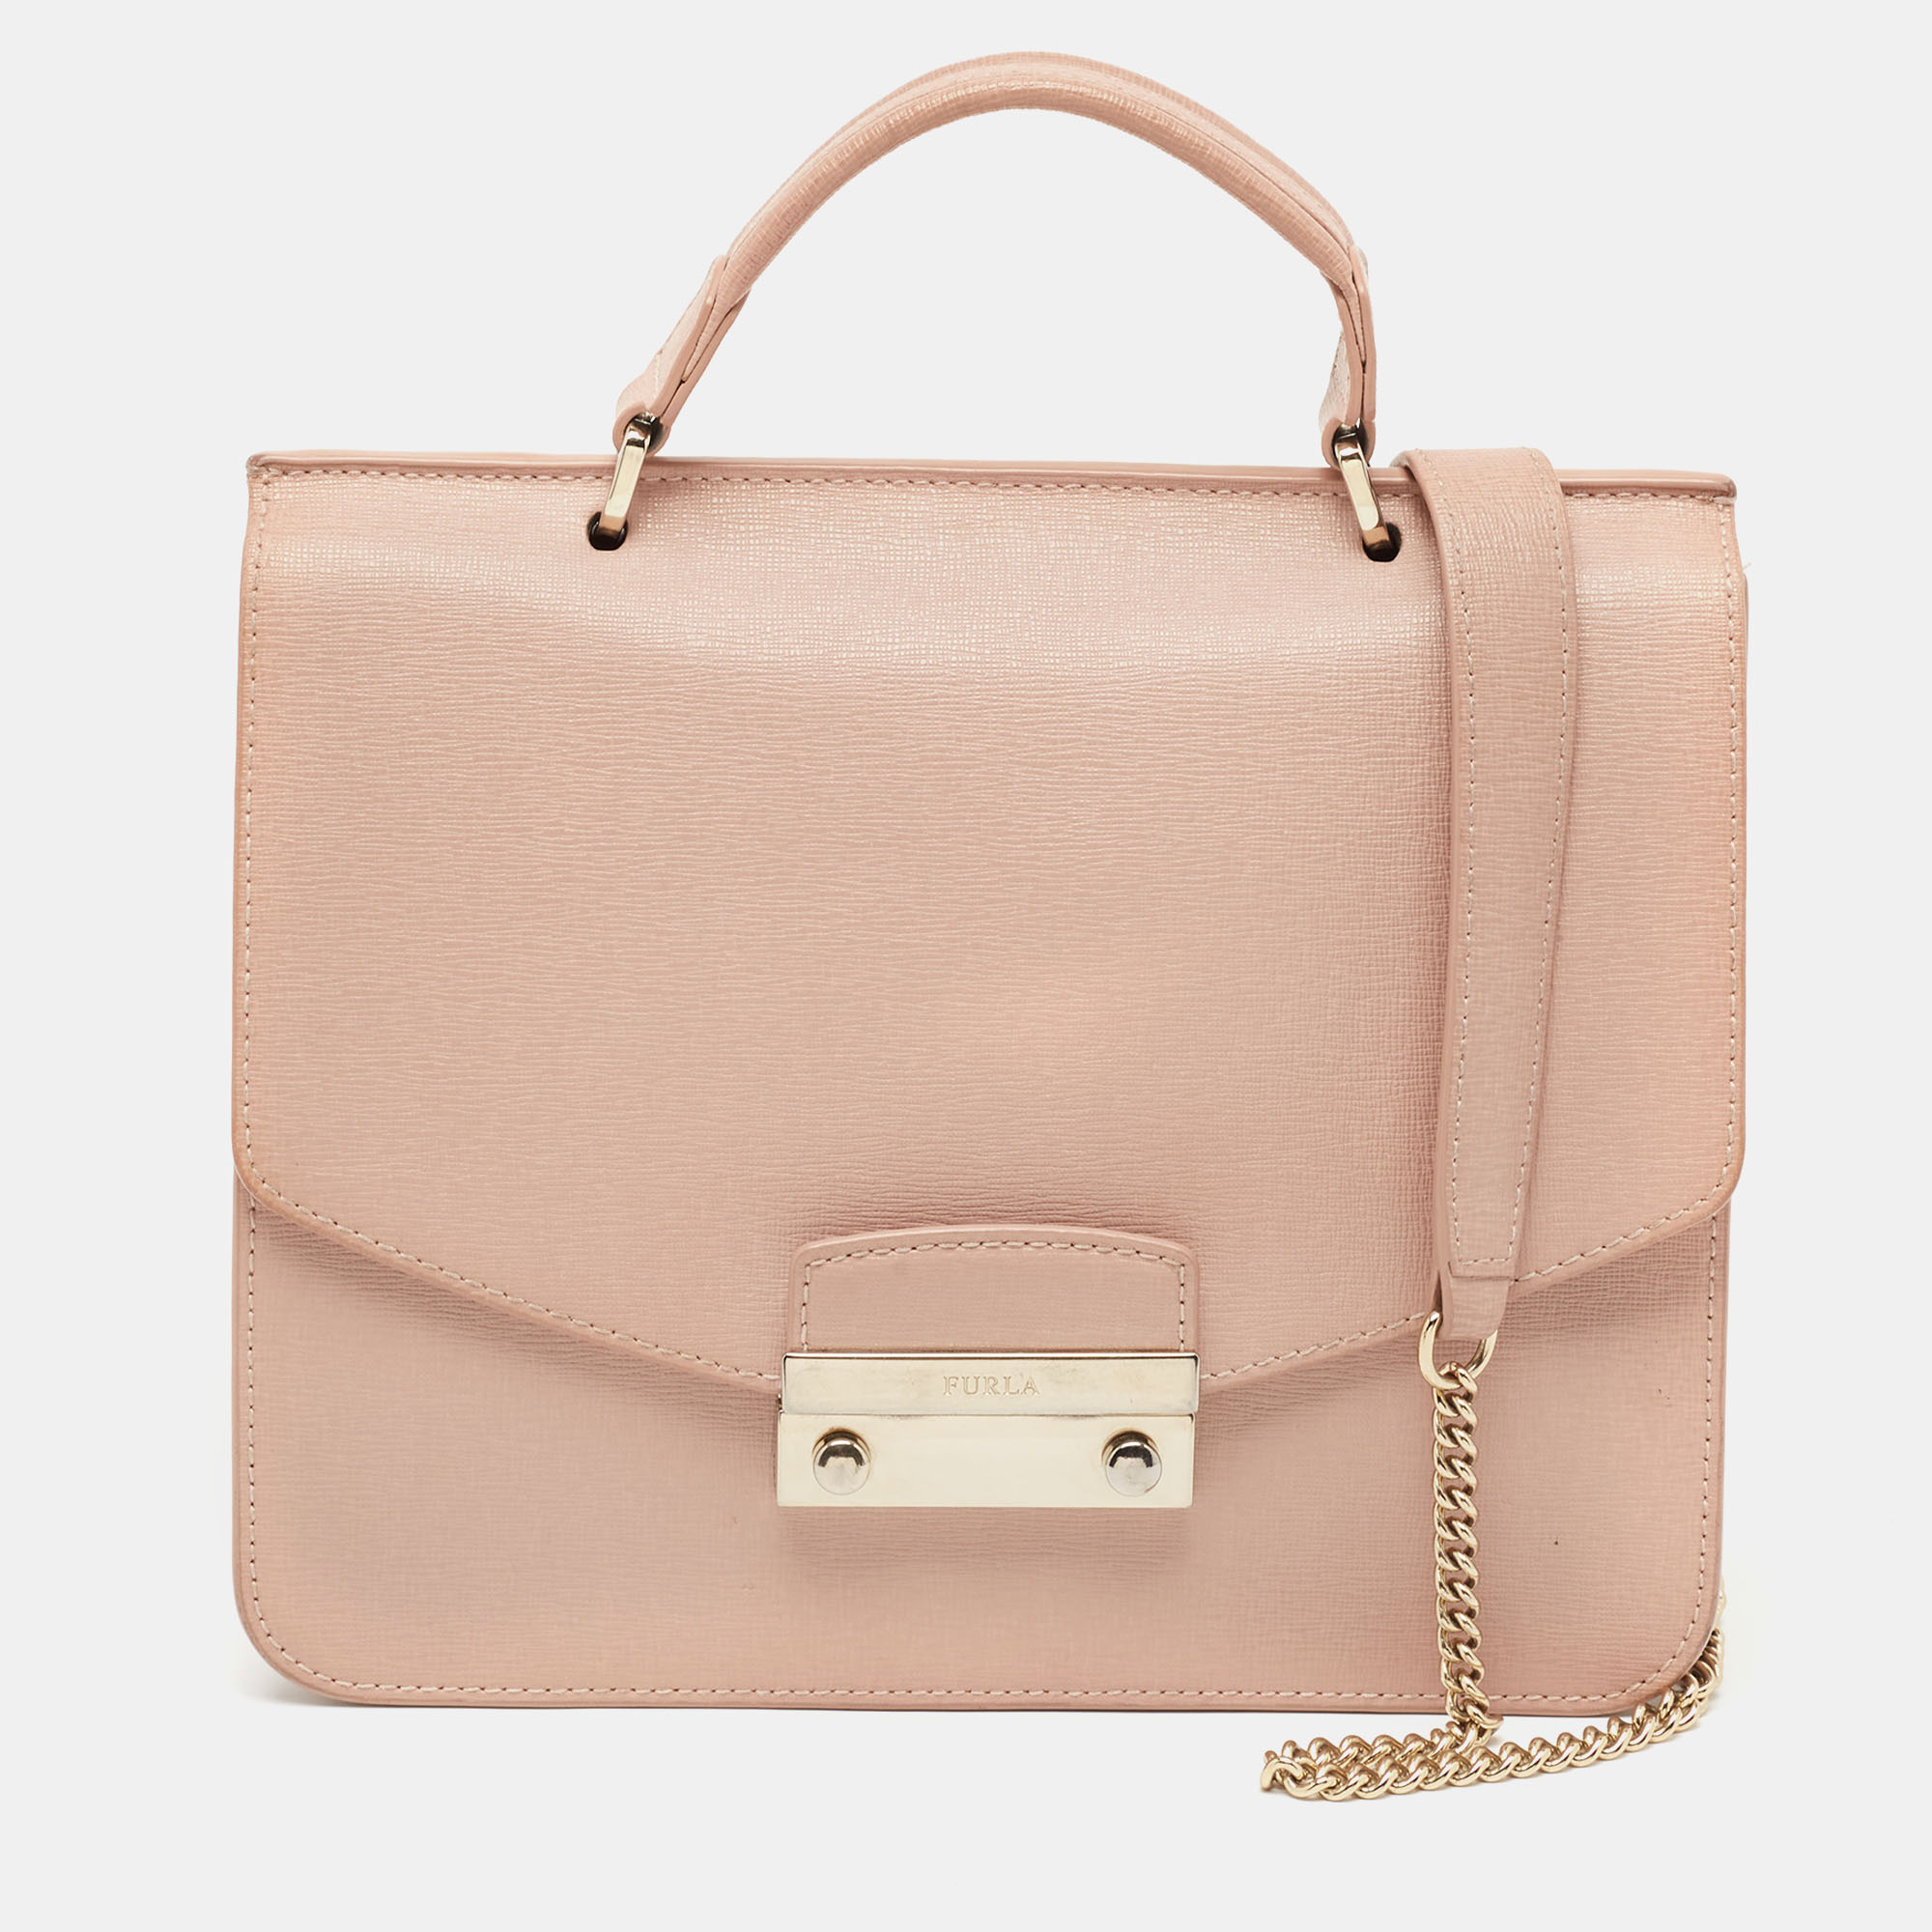 Furla light pink leather julia top handle bag